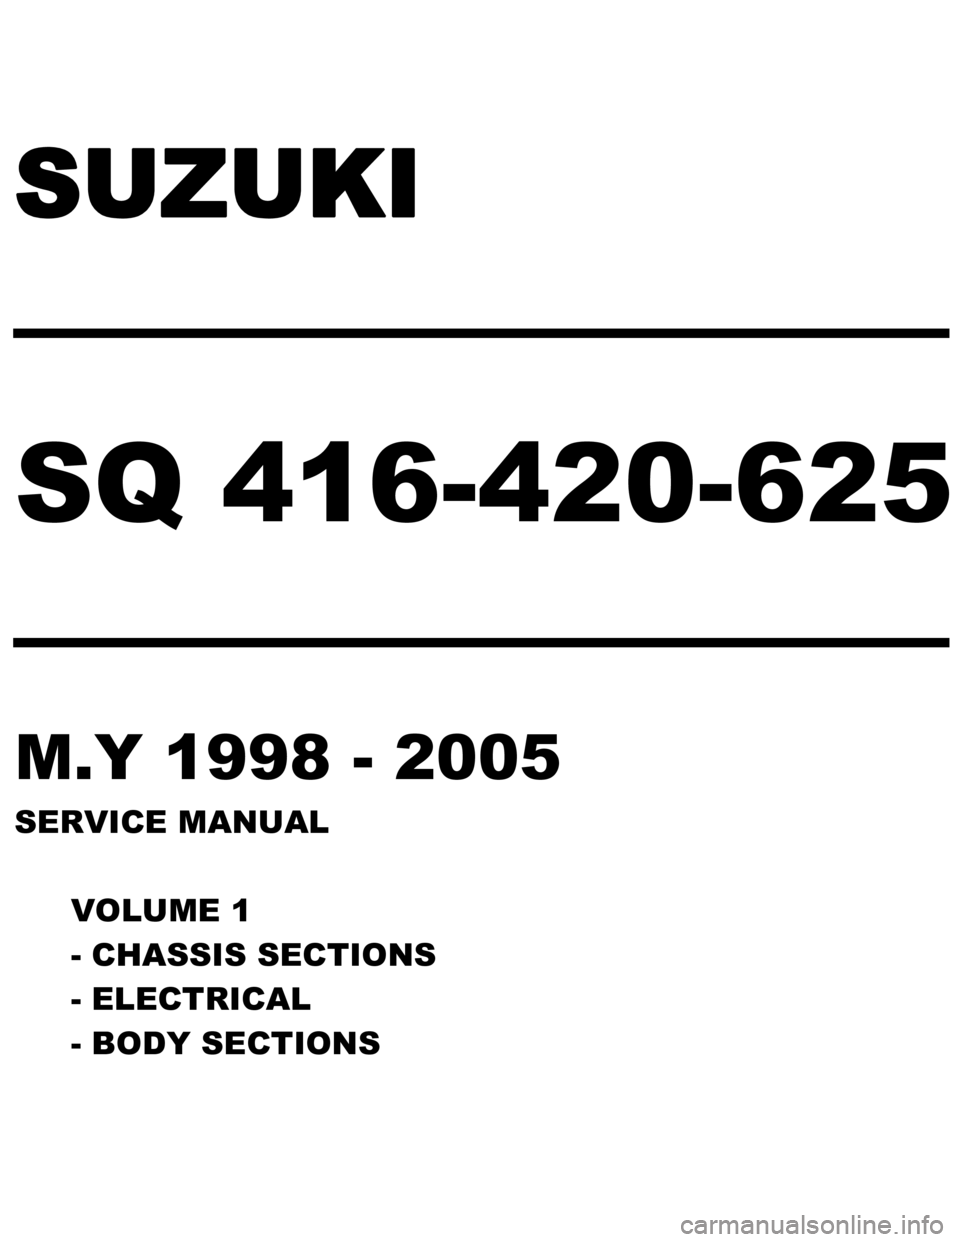 SUZUKI GRAND VITARA 2005 2.G Service Workshop Manual 
SUZUKI  
──────────── 
SQ 416-420-625 
──────────── 
M.Y 1998 - 2005 
SERVICE MANUAL   
VOLUME 1 
- CHASSIS SECTIONS 
- ELECTRICAL 
- BODY SECTIONS  